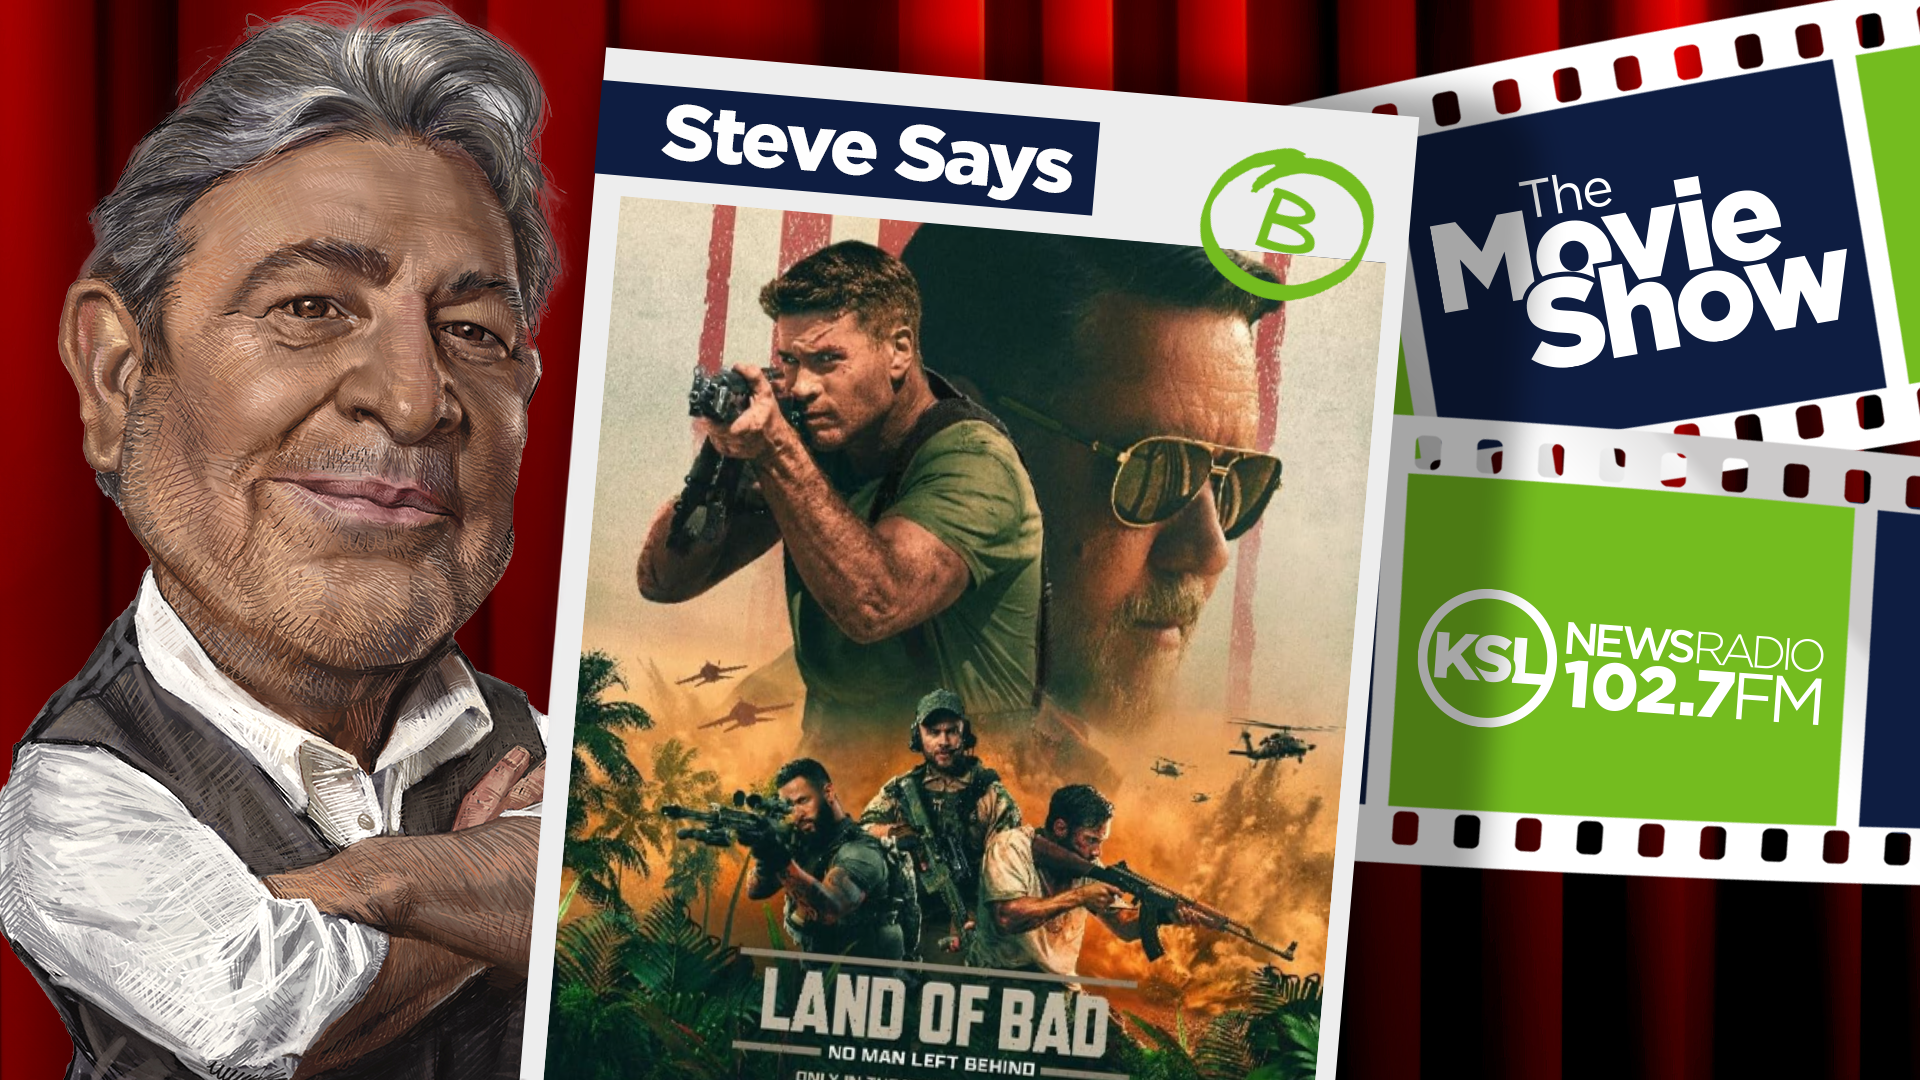 ksl movie show review steve salles reviews land of bad...